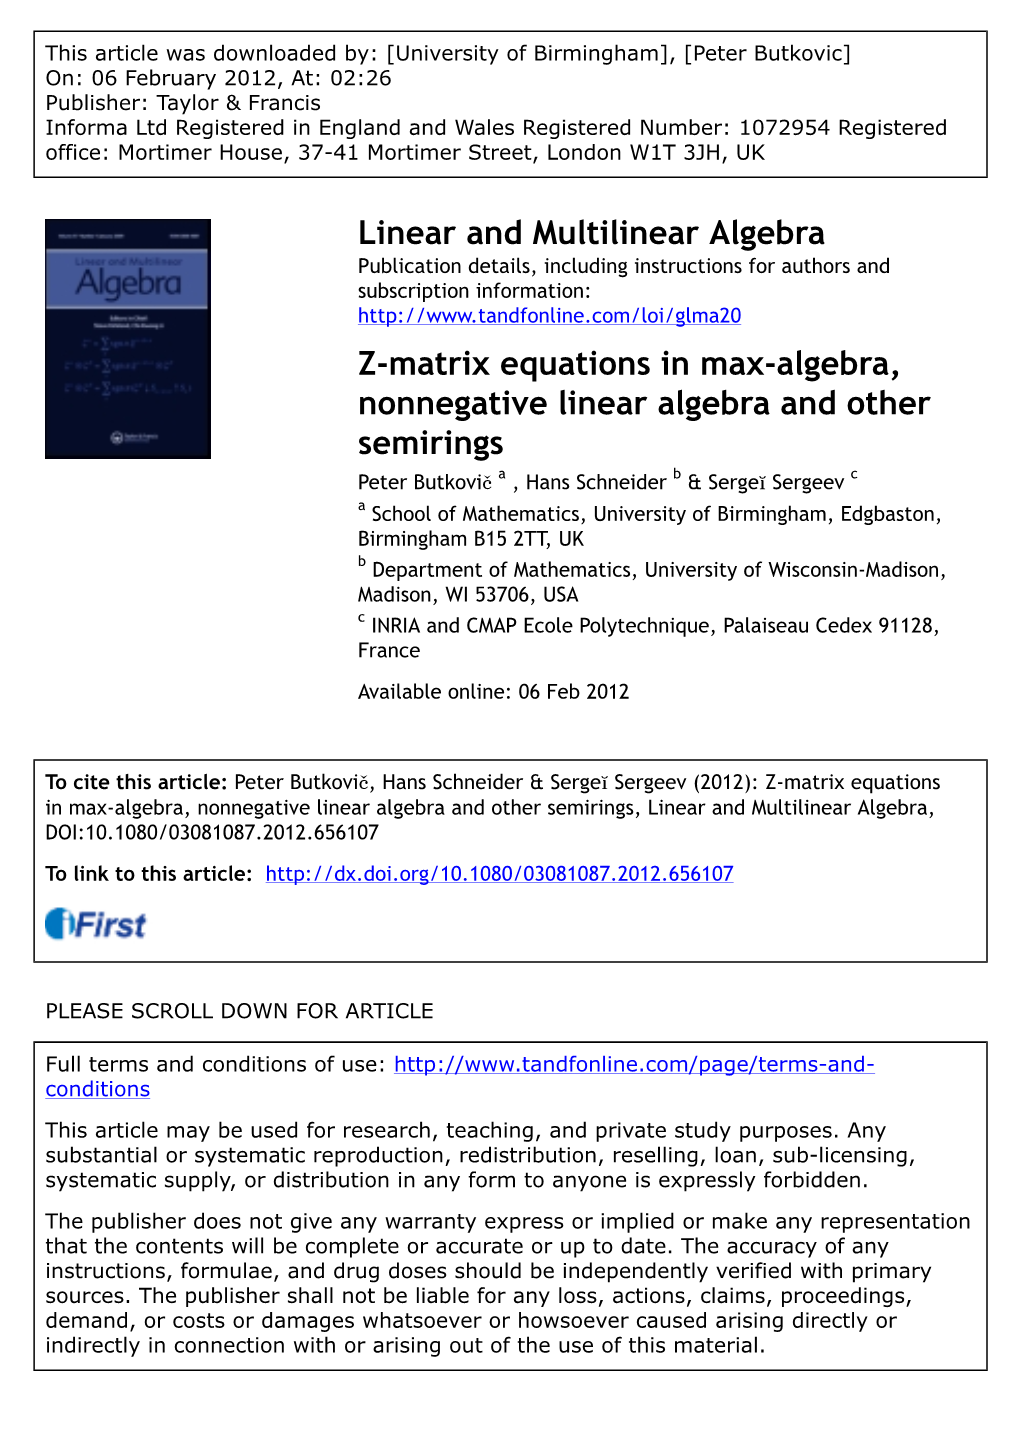 Z-Matrix Equations in Max-Algebra, Nonnegative Linear Algebra And